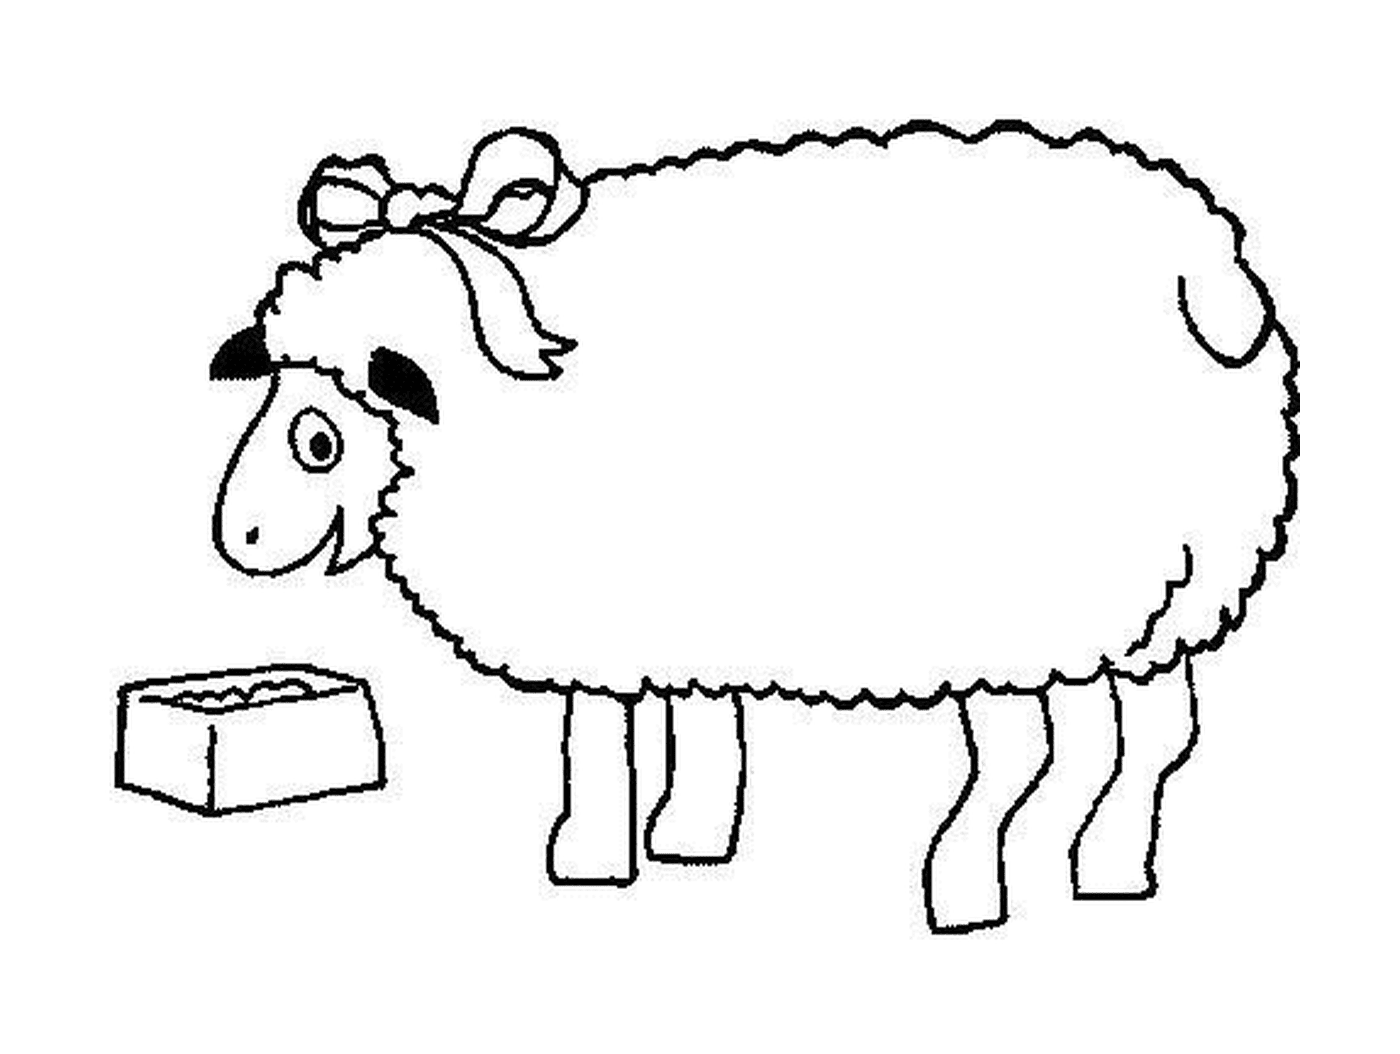  Sheep eats near box 